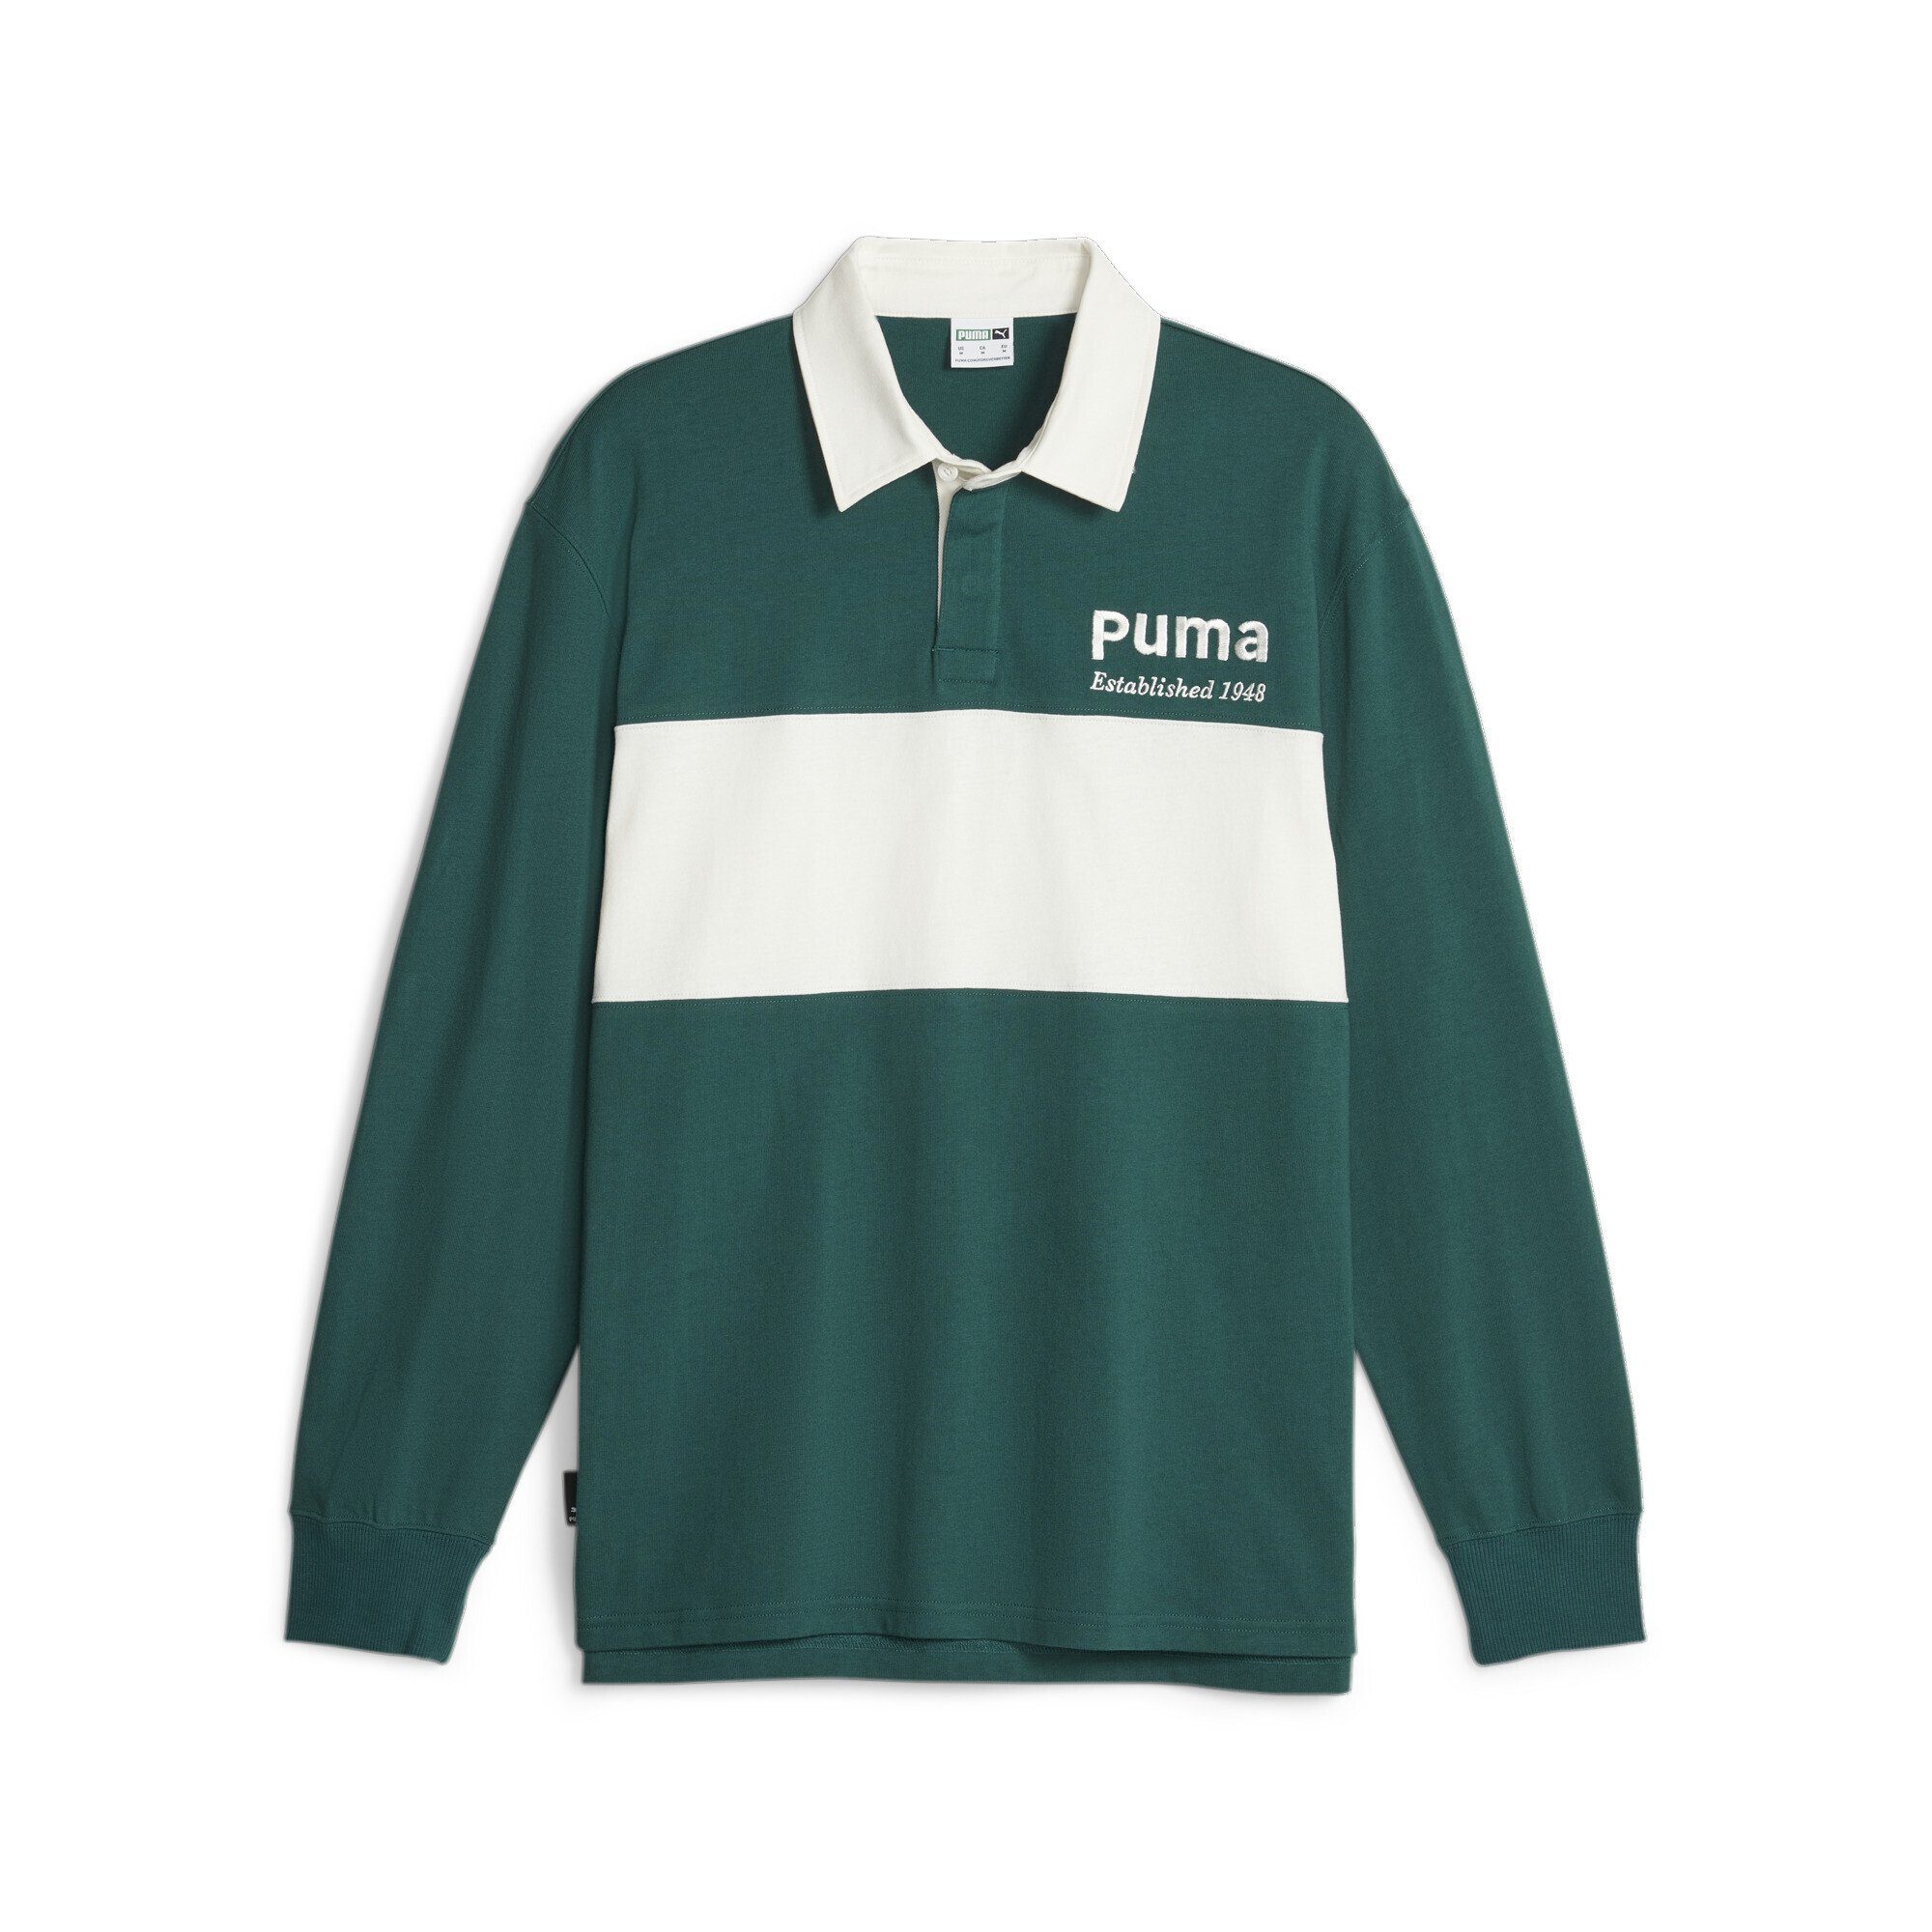 Rugby-Shirt Herren PUMA Malachite PUMA Green Team Poloshirt